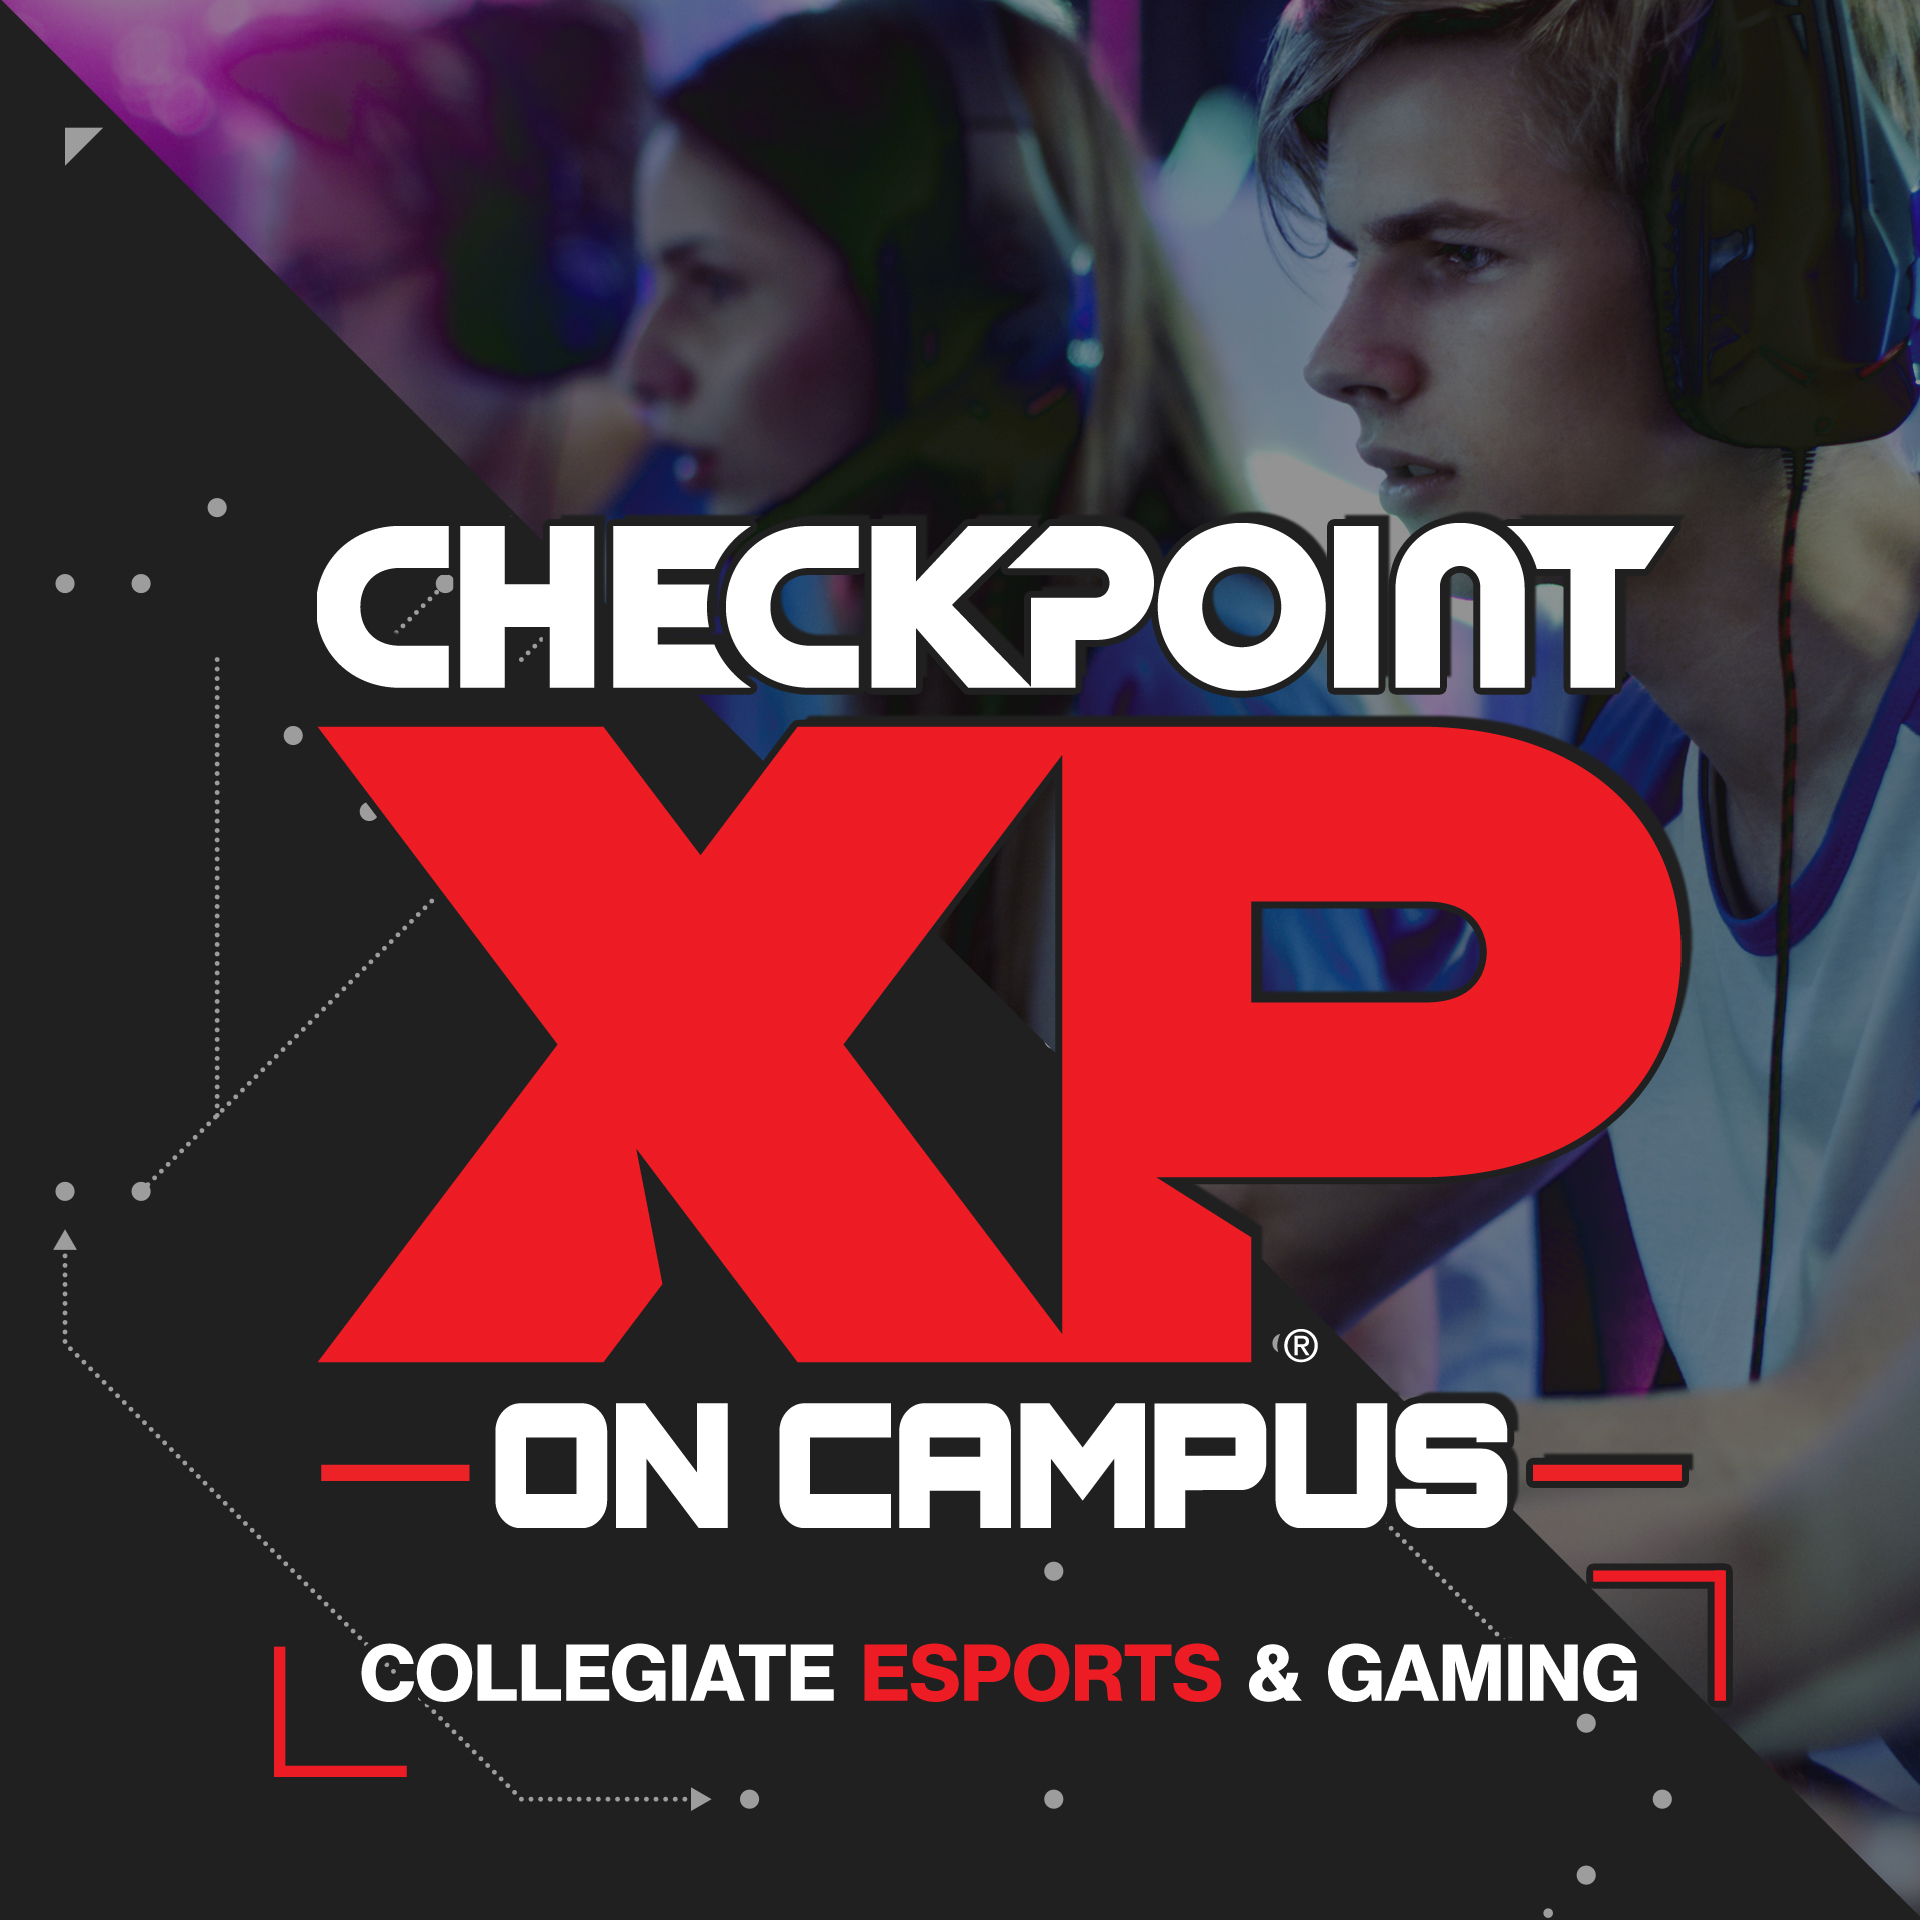 CheckpointXP On Campus